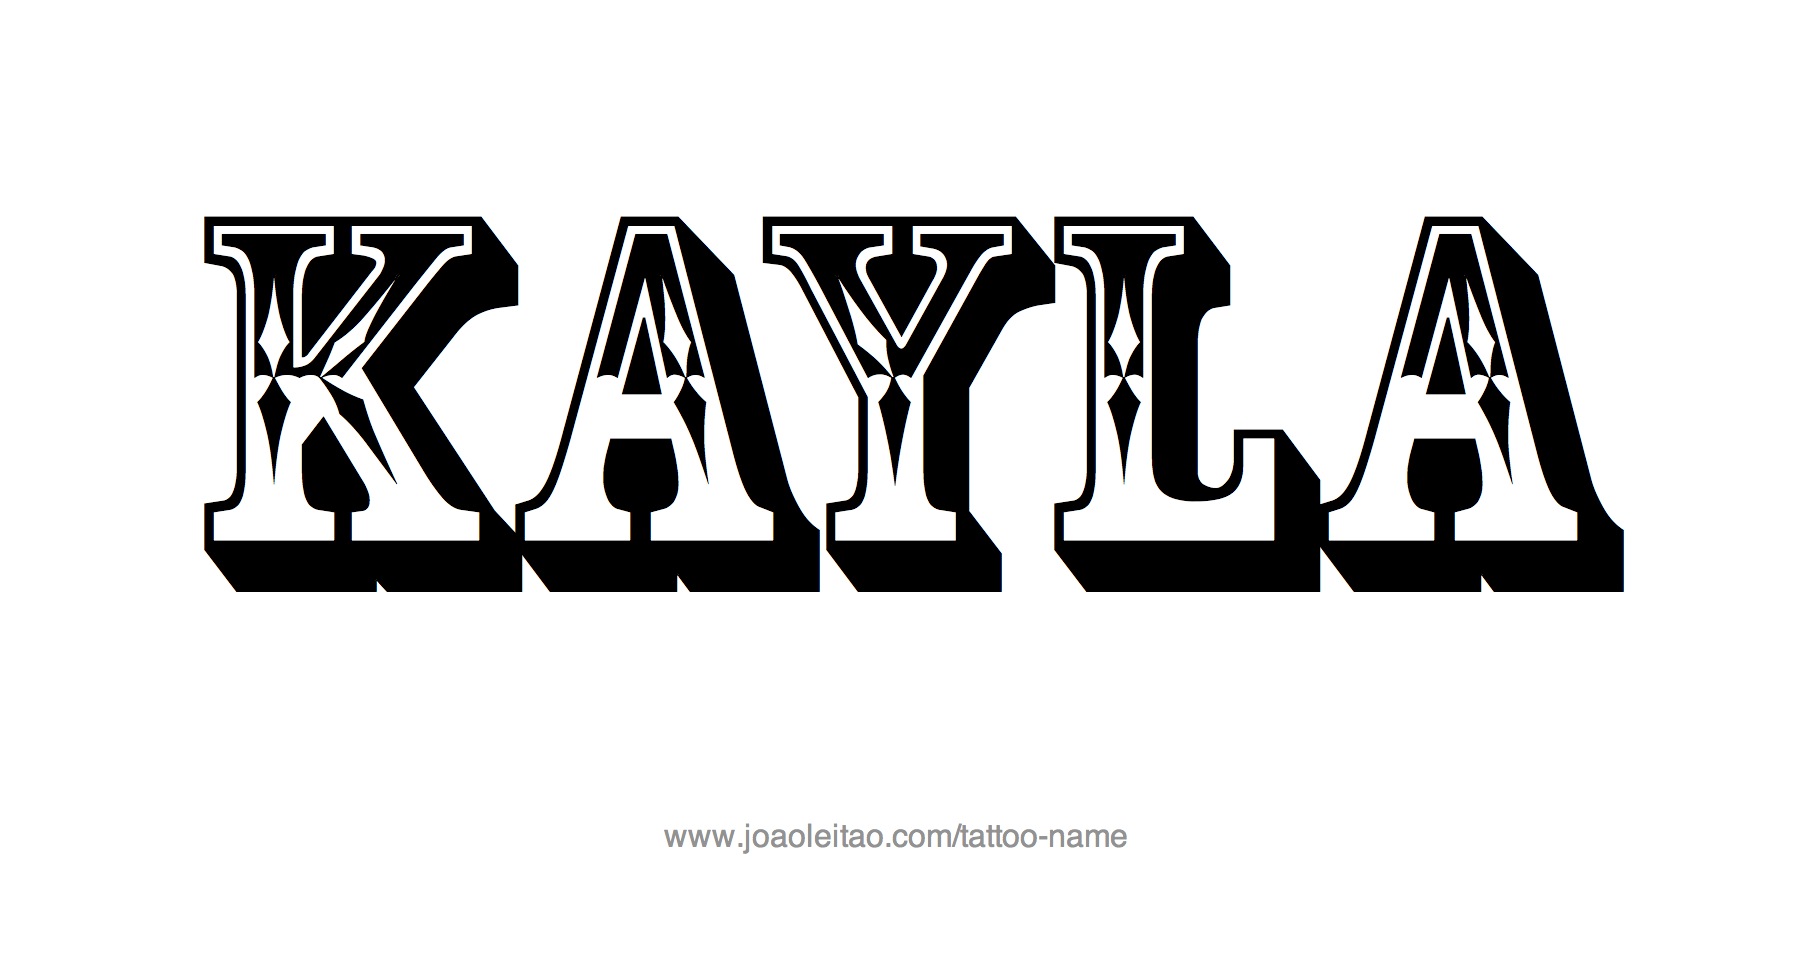 Tattoo Design Name Kayla 